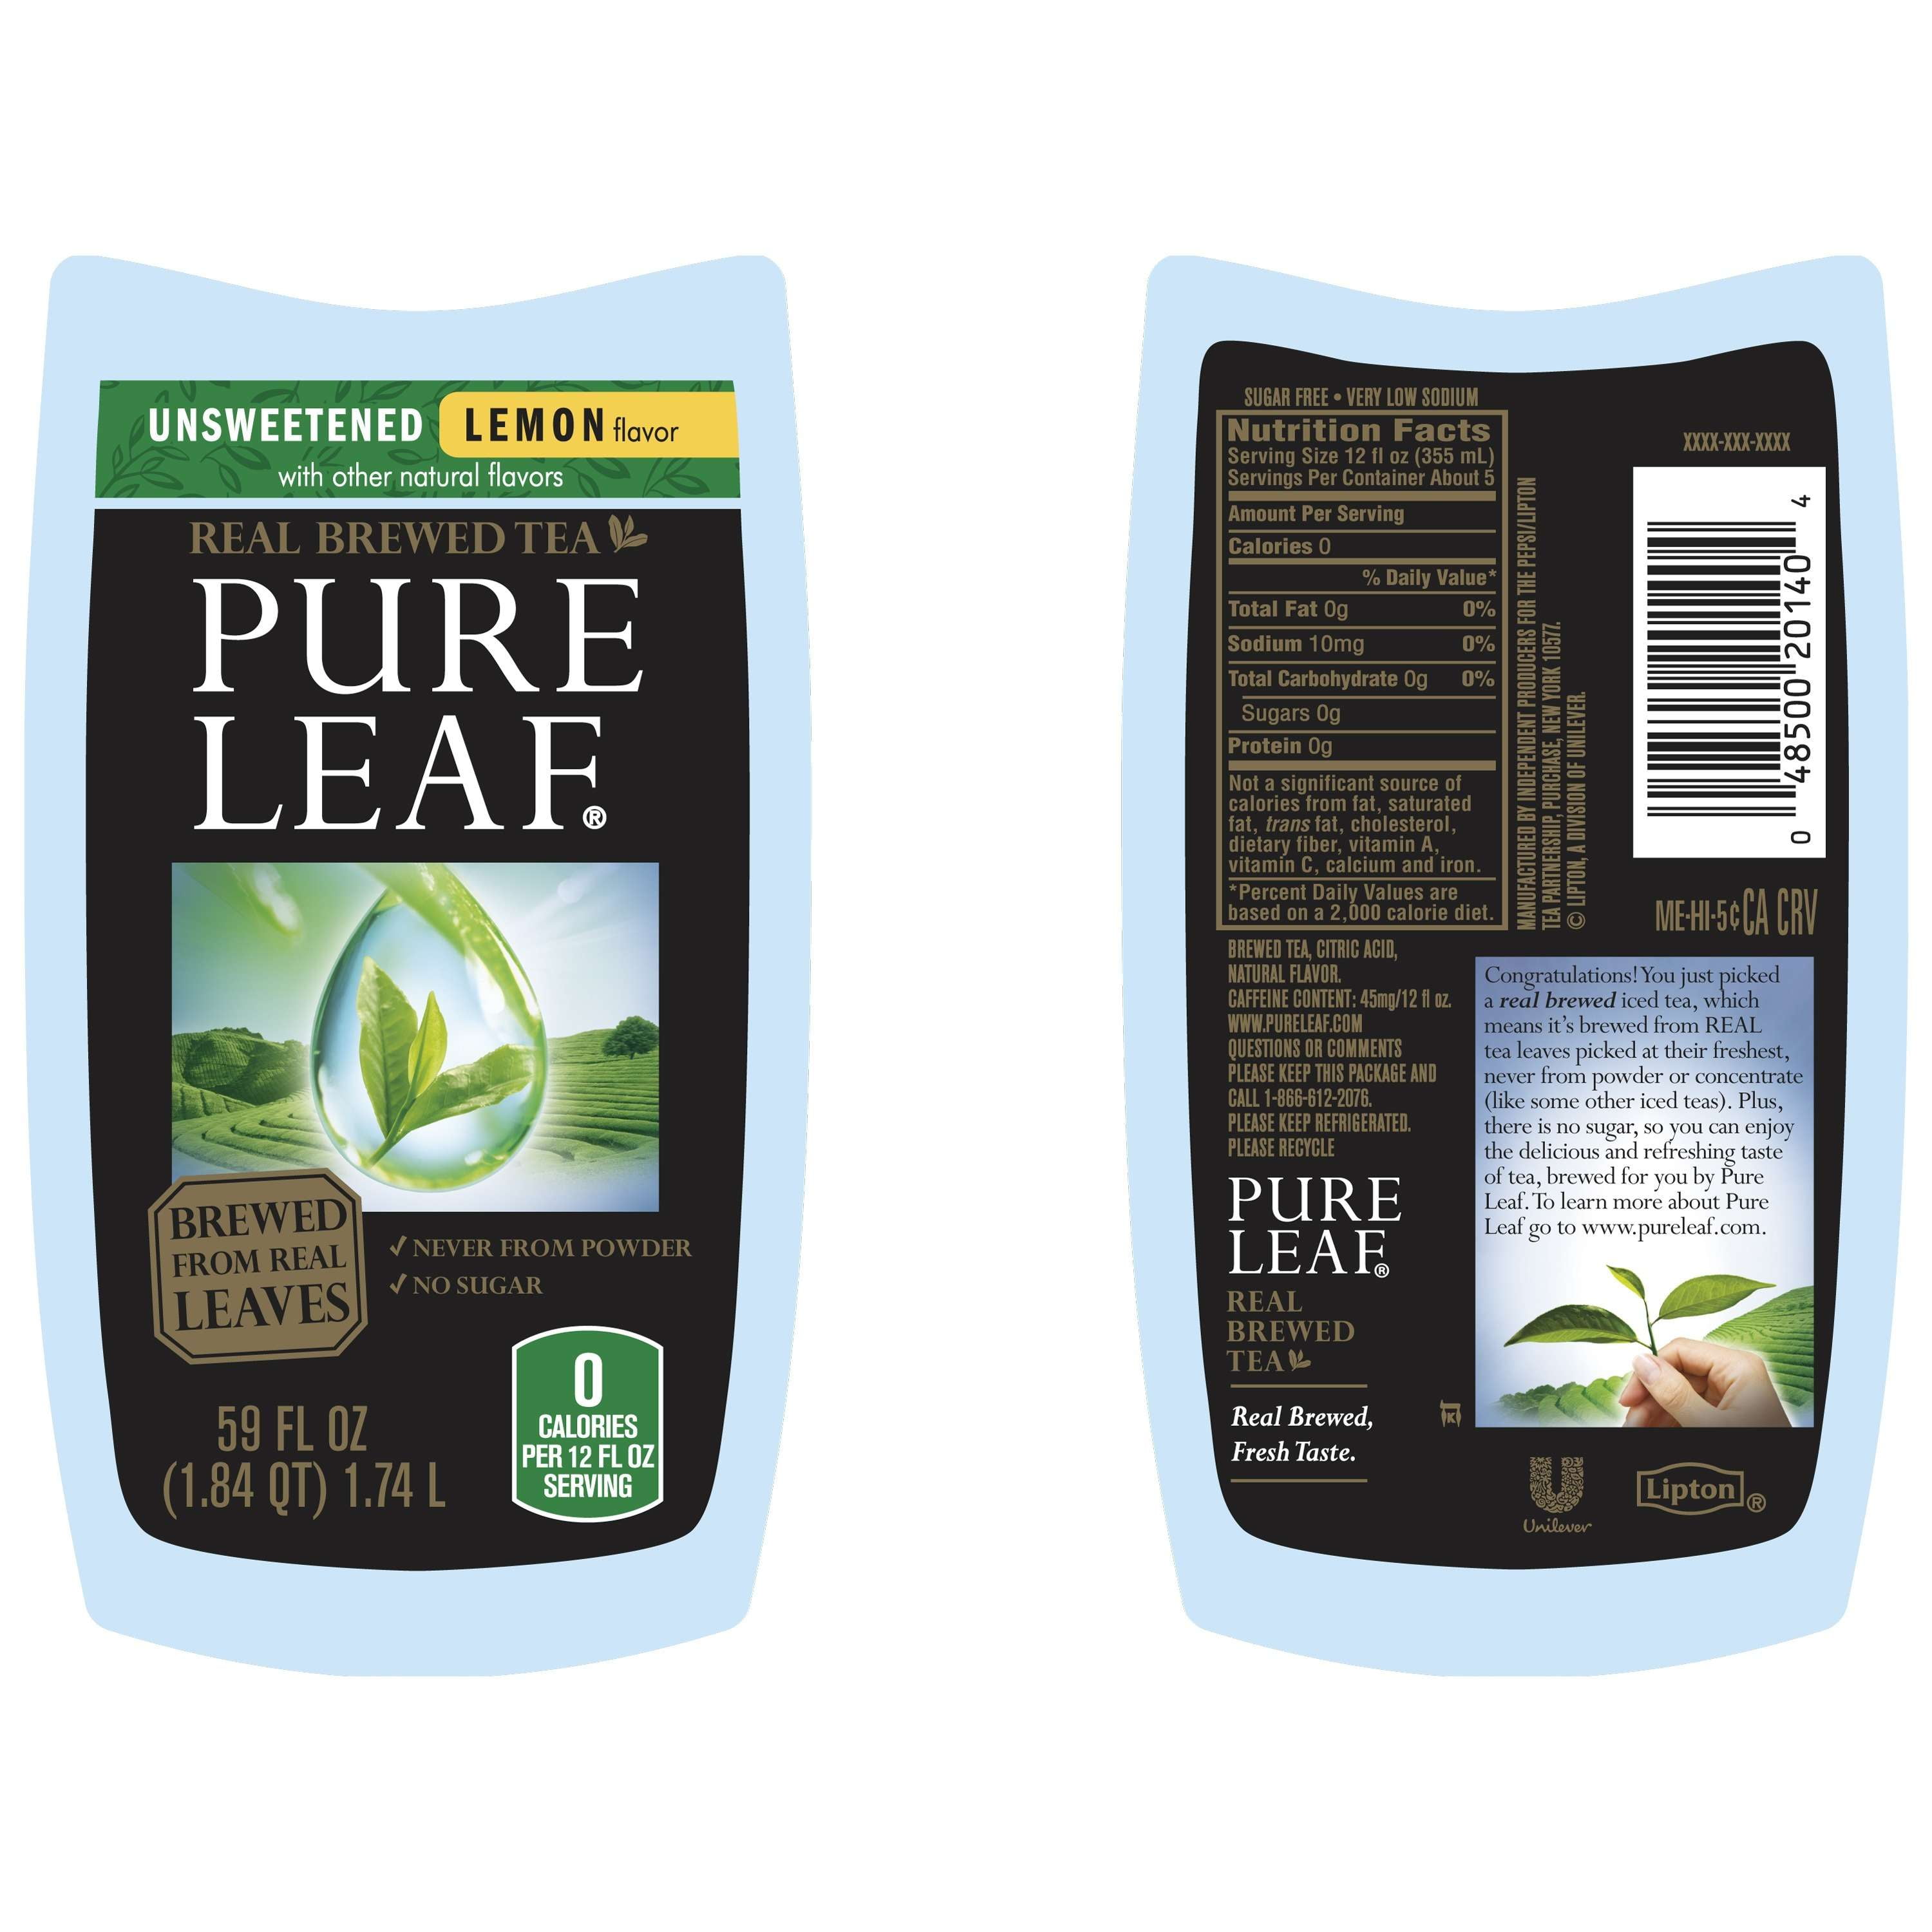 New Freshly Brewed Lipton Pure Leaf Teas ~ They'll Make You Say AHHHHH